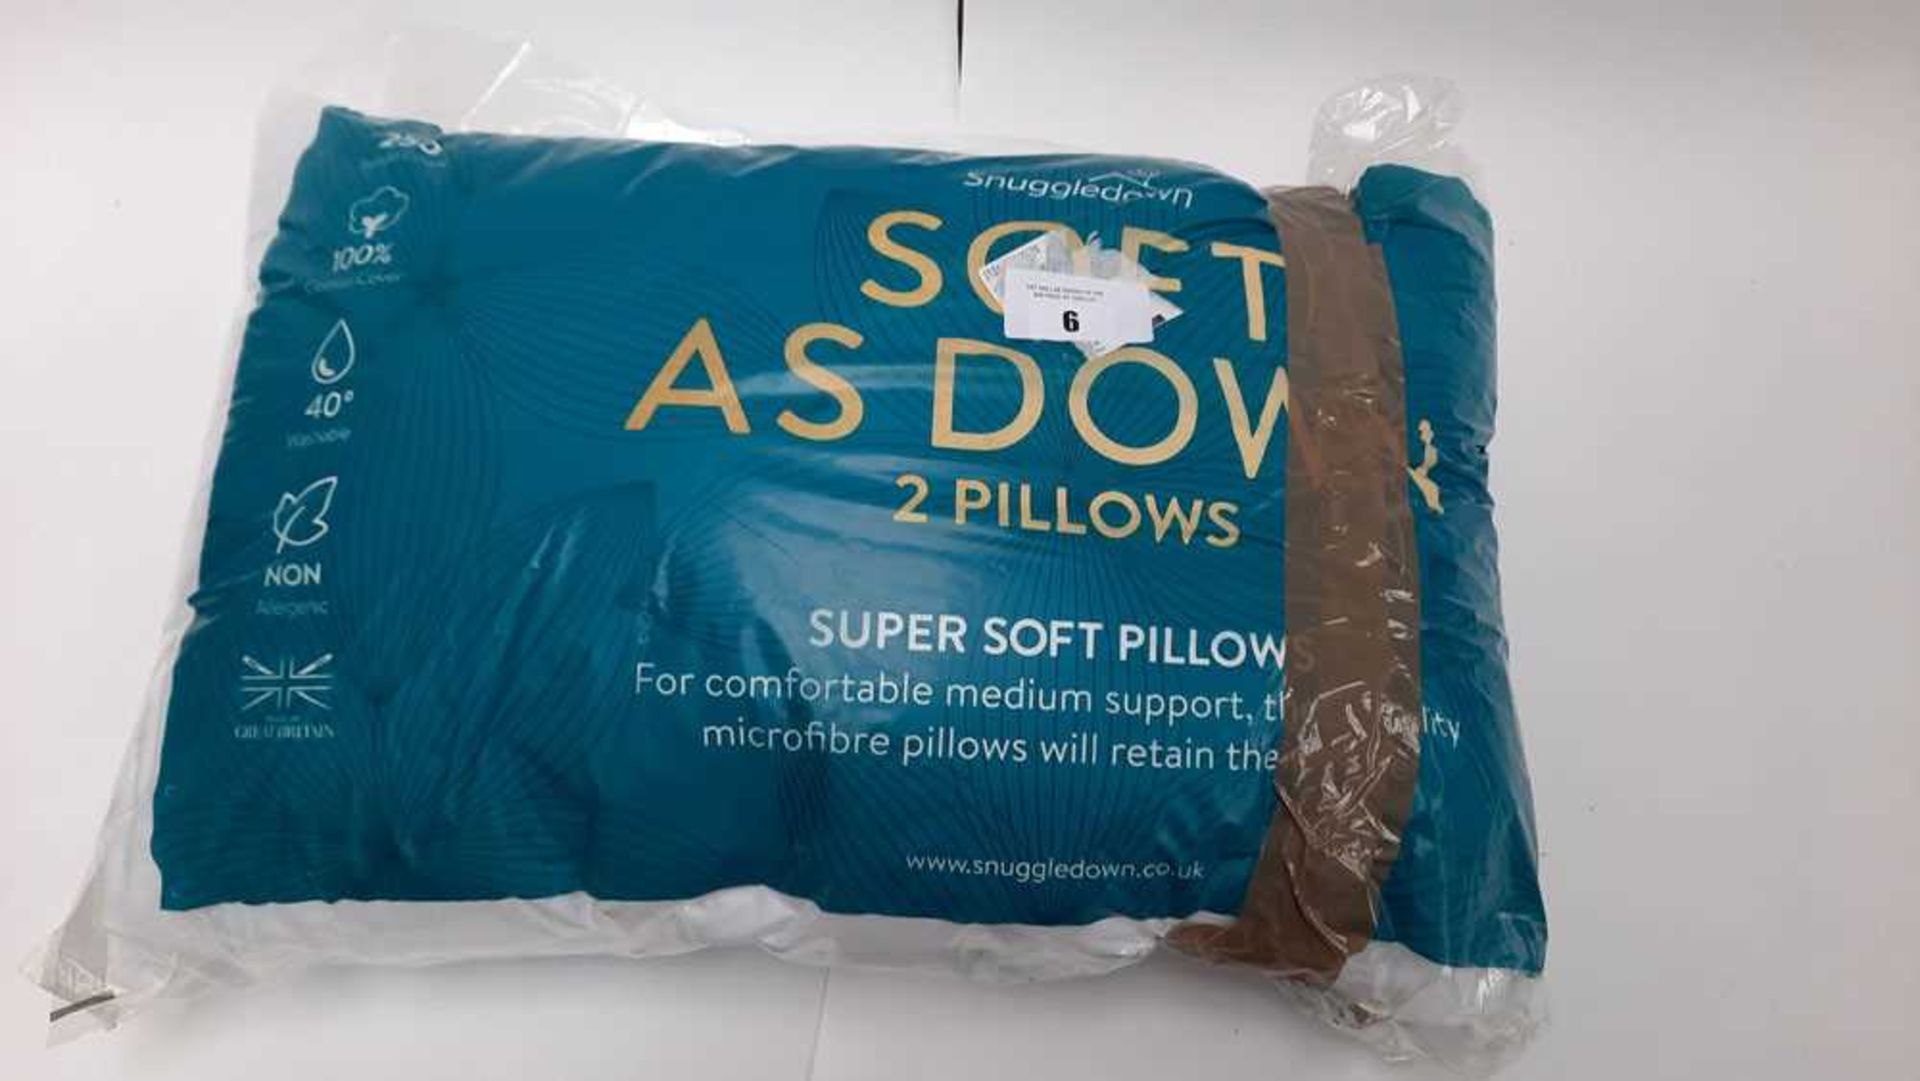 +VAT 2x Snuggledown soft as down pillows in bag